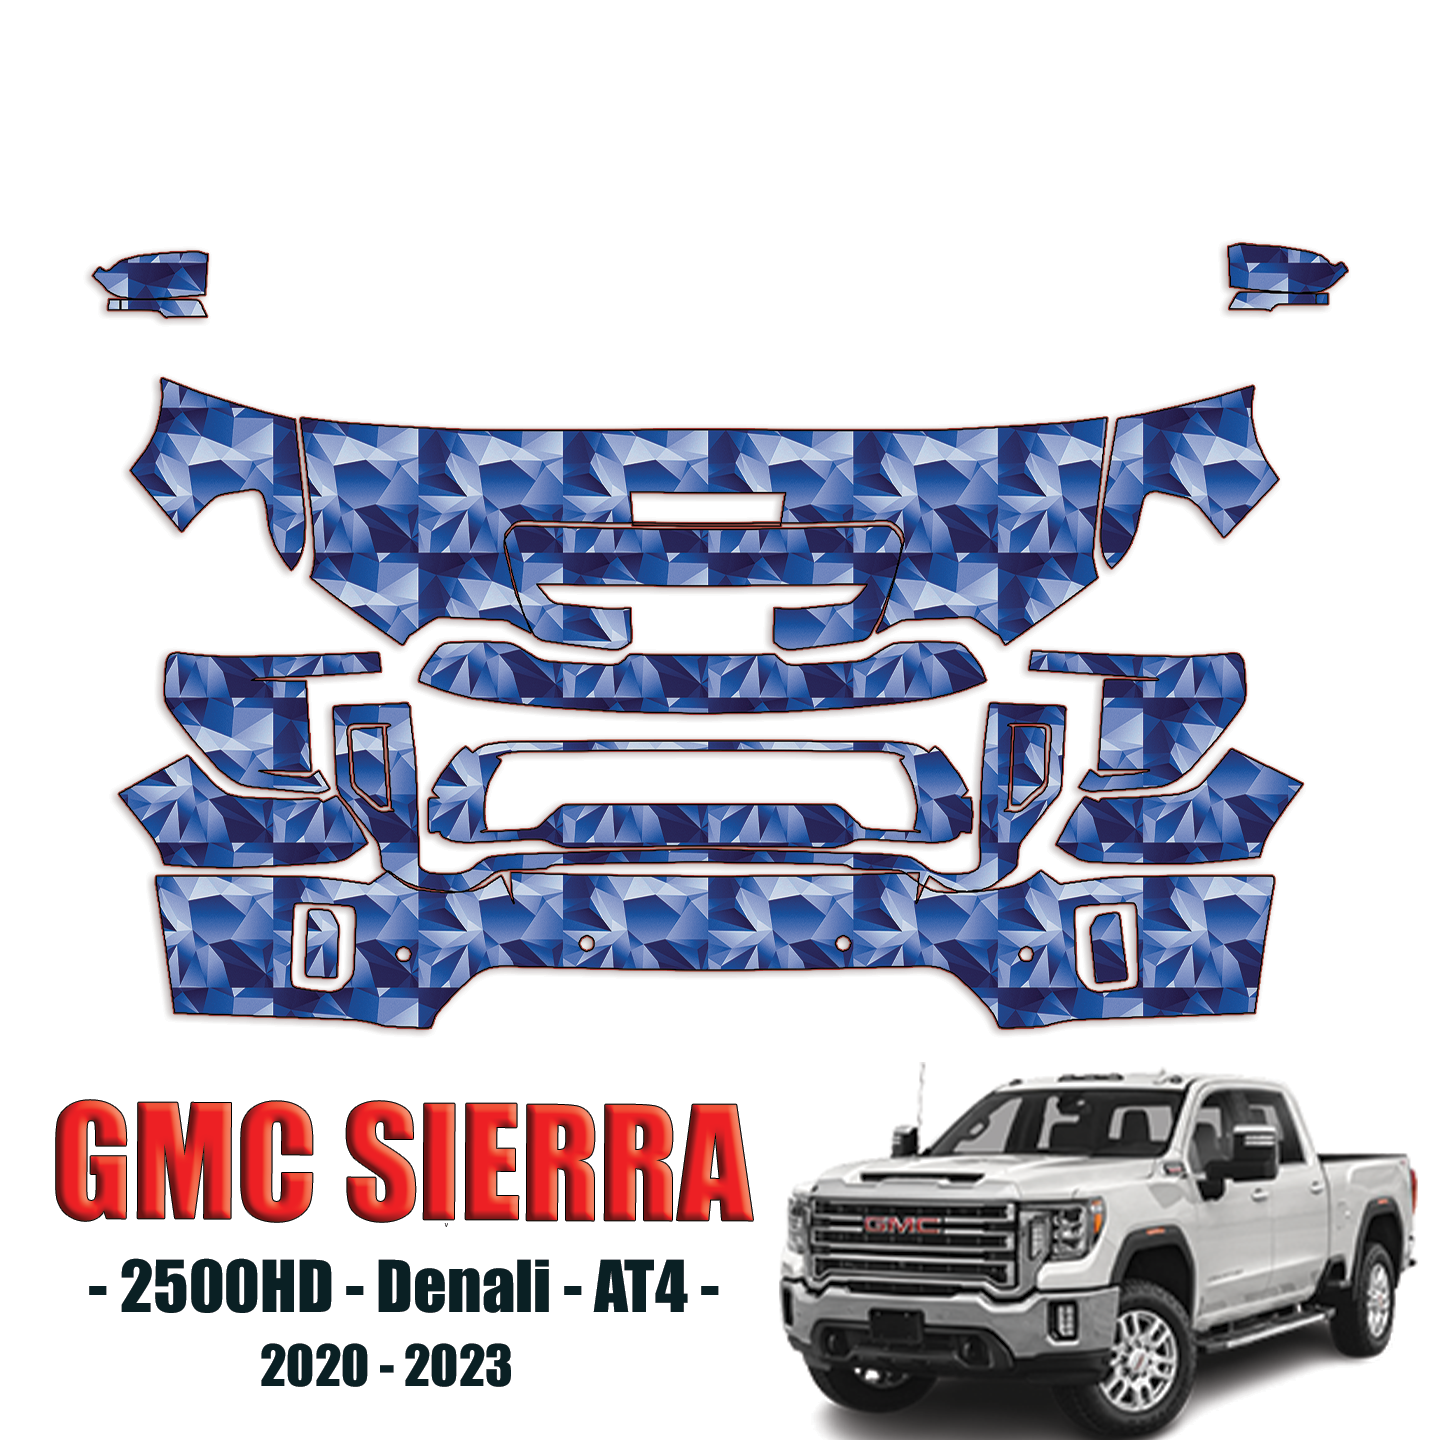 2020-2023 GMC Sierra 2500HD – Denali, AT4 Paint Protection PPF Kit – Partial Front